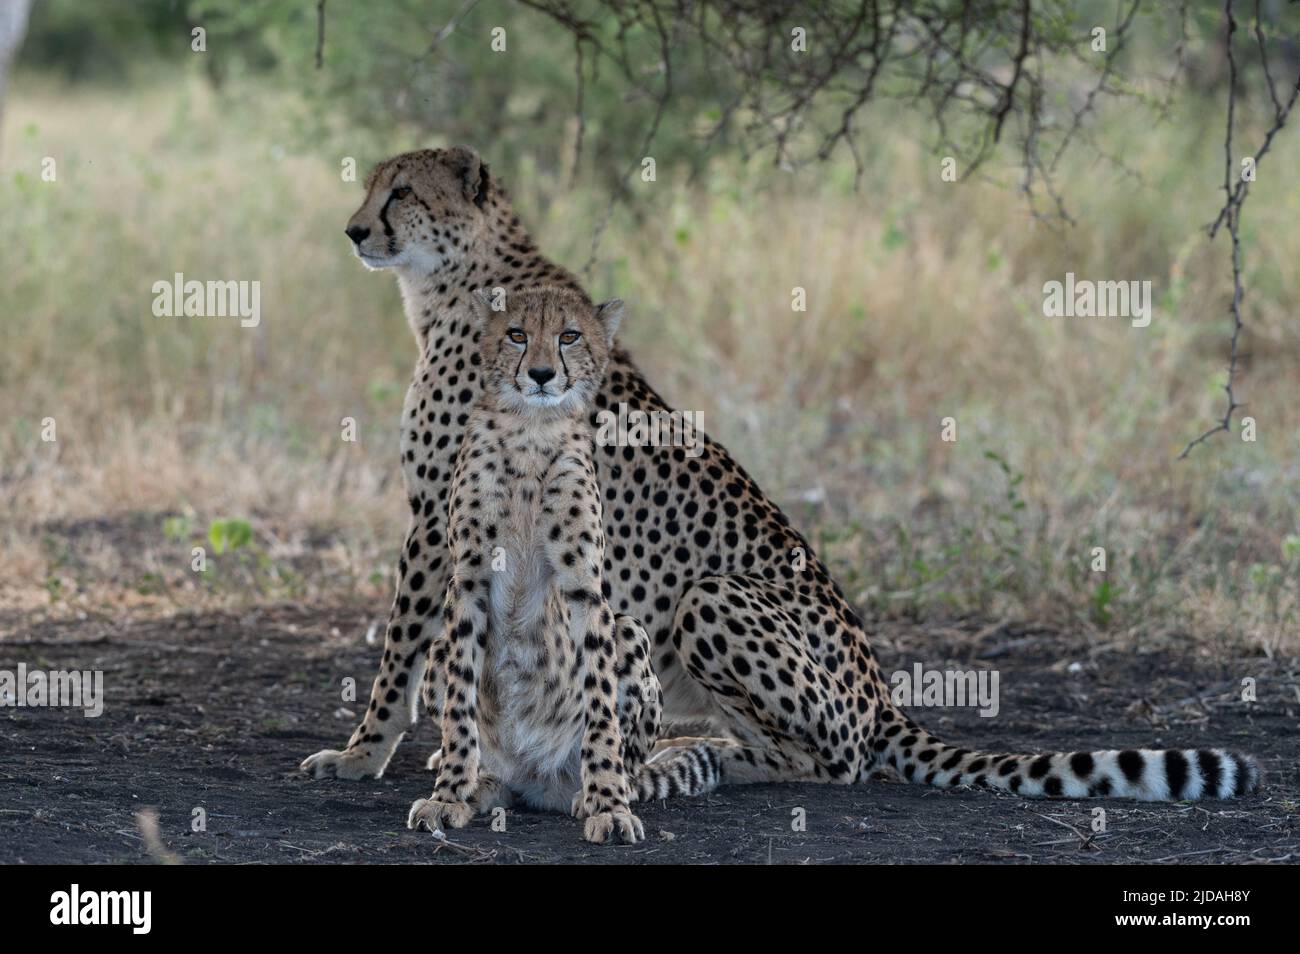 A cheetah and cub, Acinonyx jubatus, sit together under a tree, alert Stock Photo